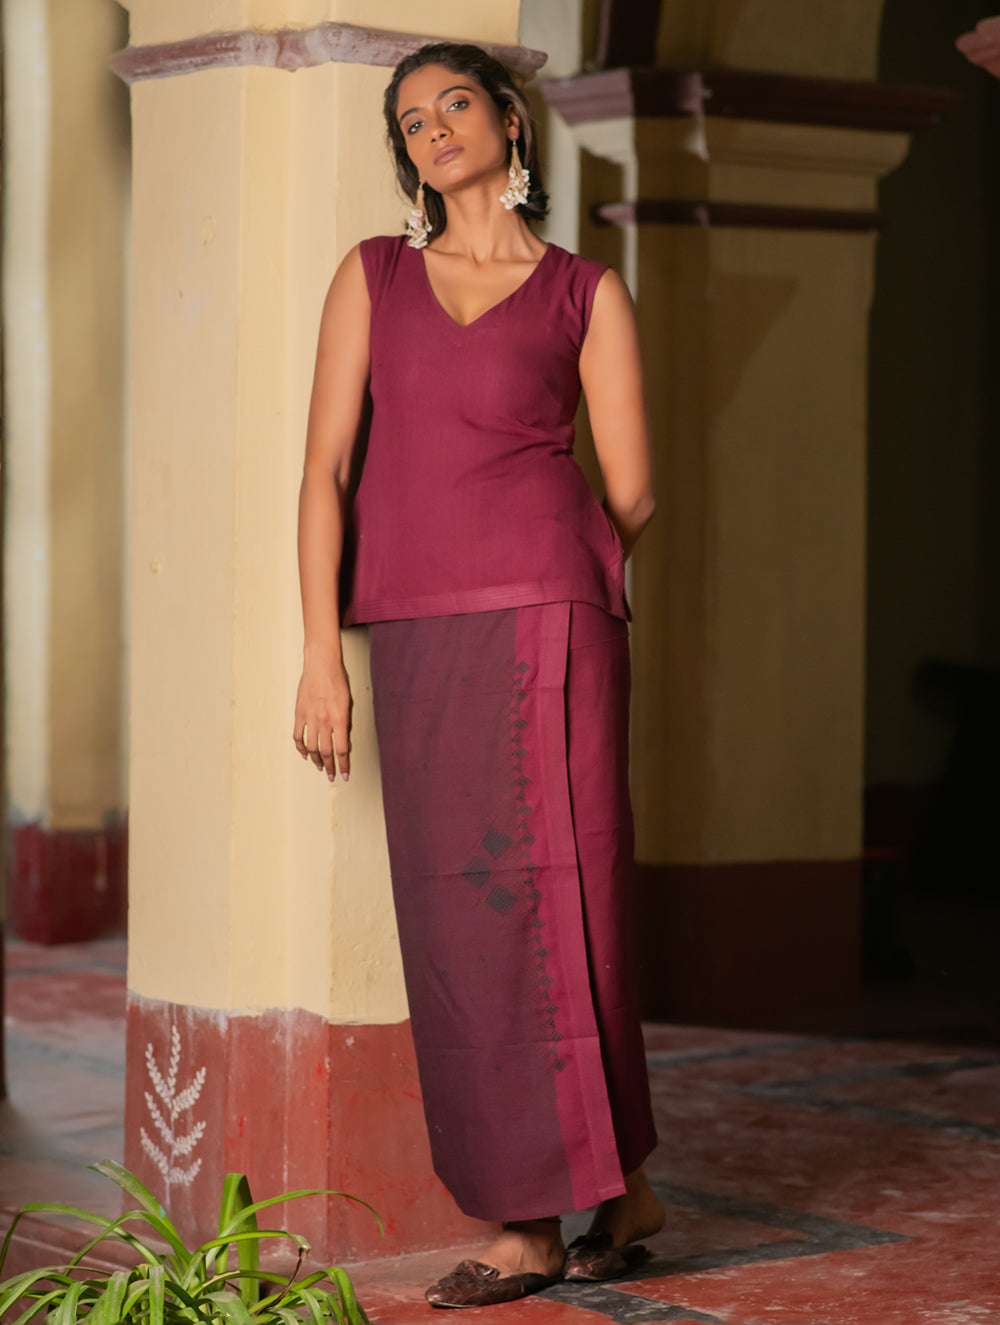 Load image into Gallery viewer, Handwoven Elegance. Kashida Pattu Cotton Wrap Skirt &amp; Top Set - Deep Maroon